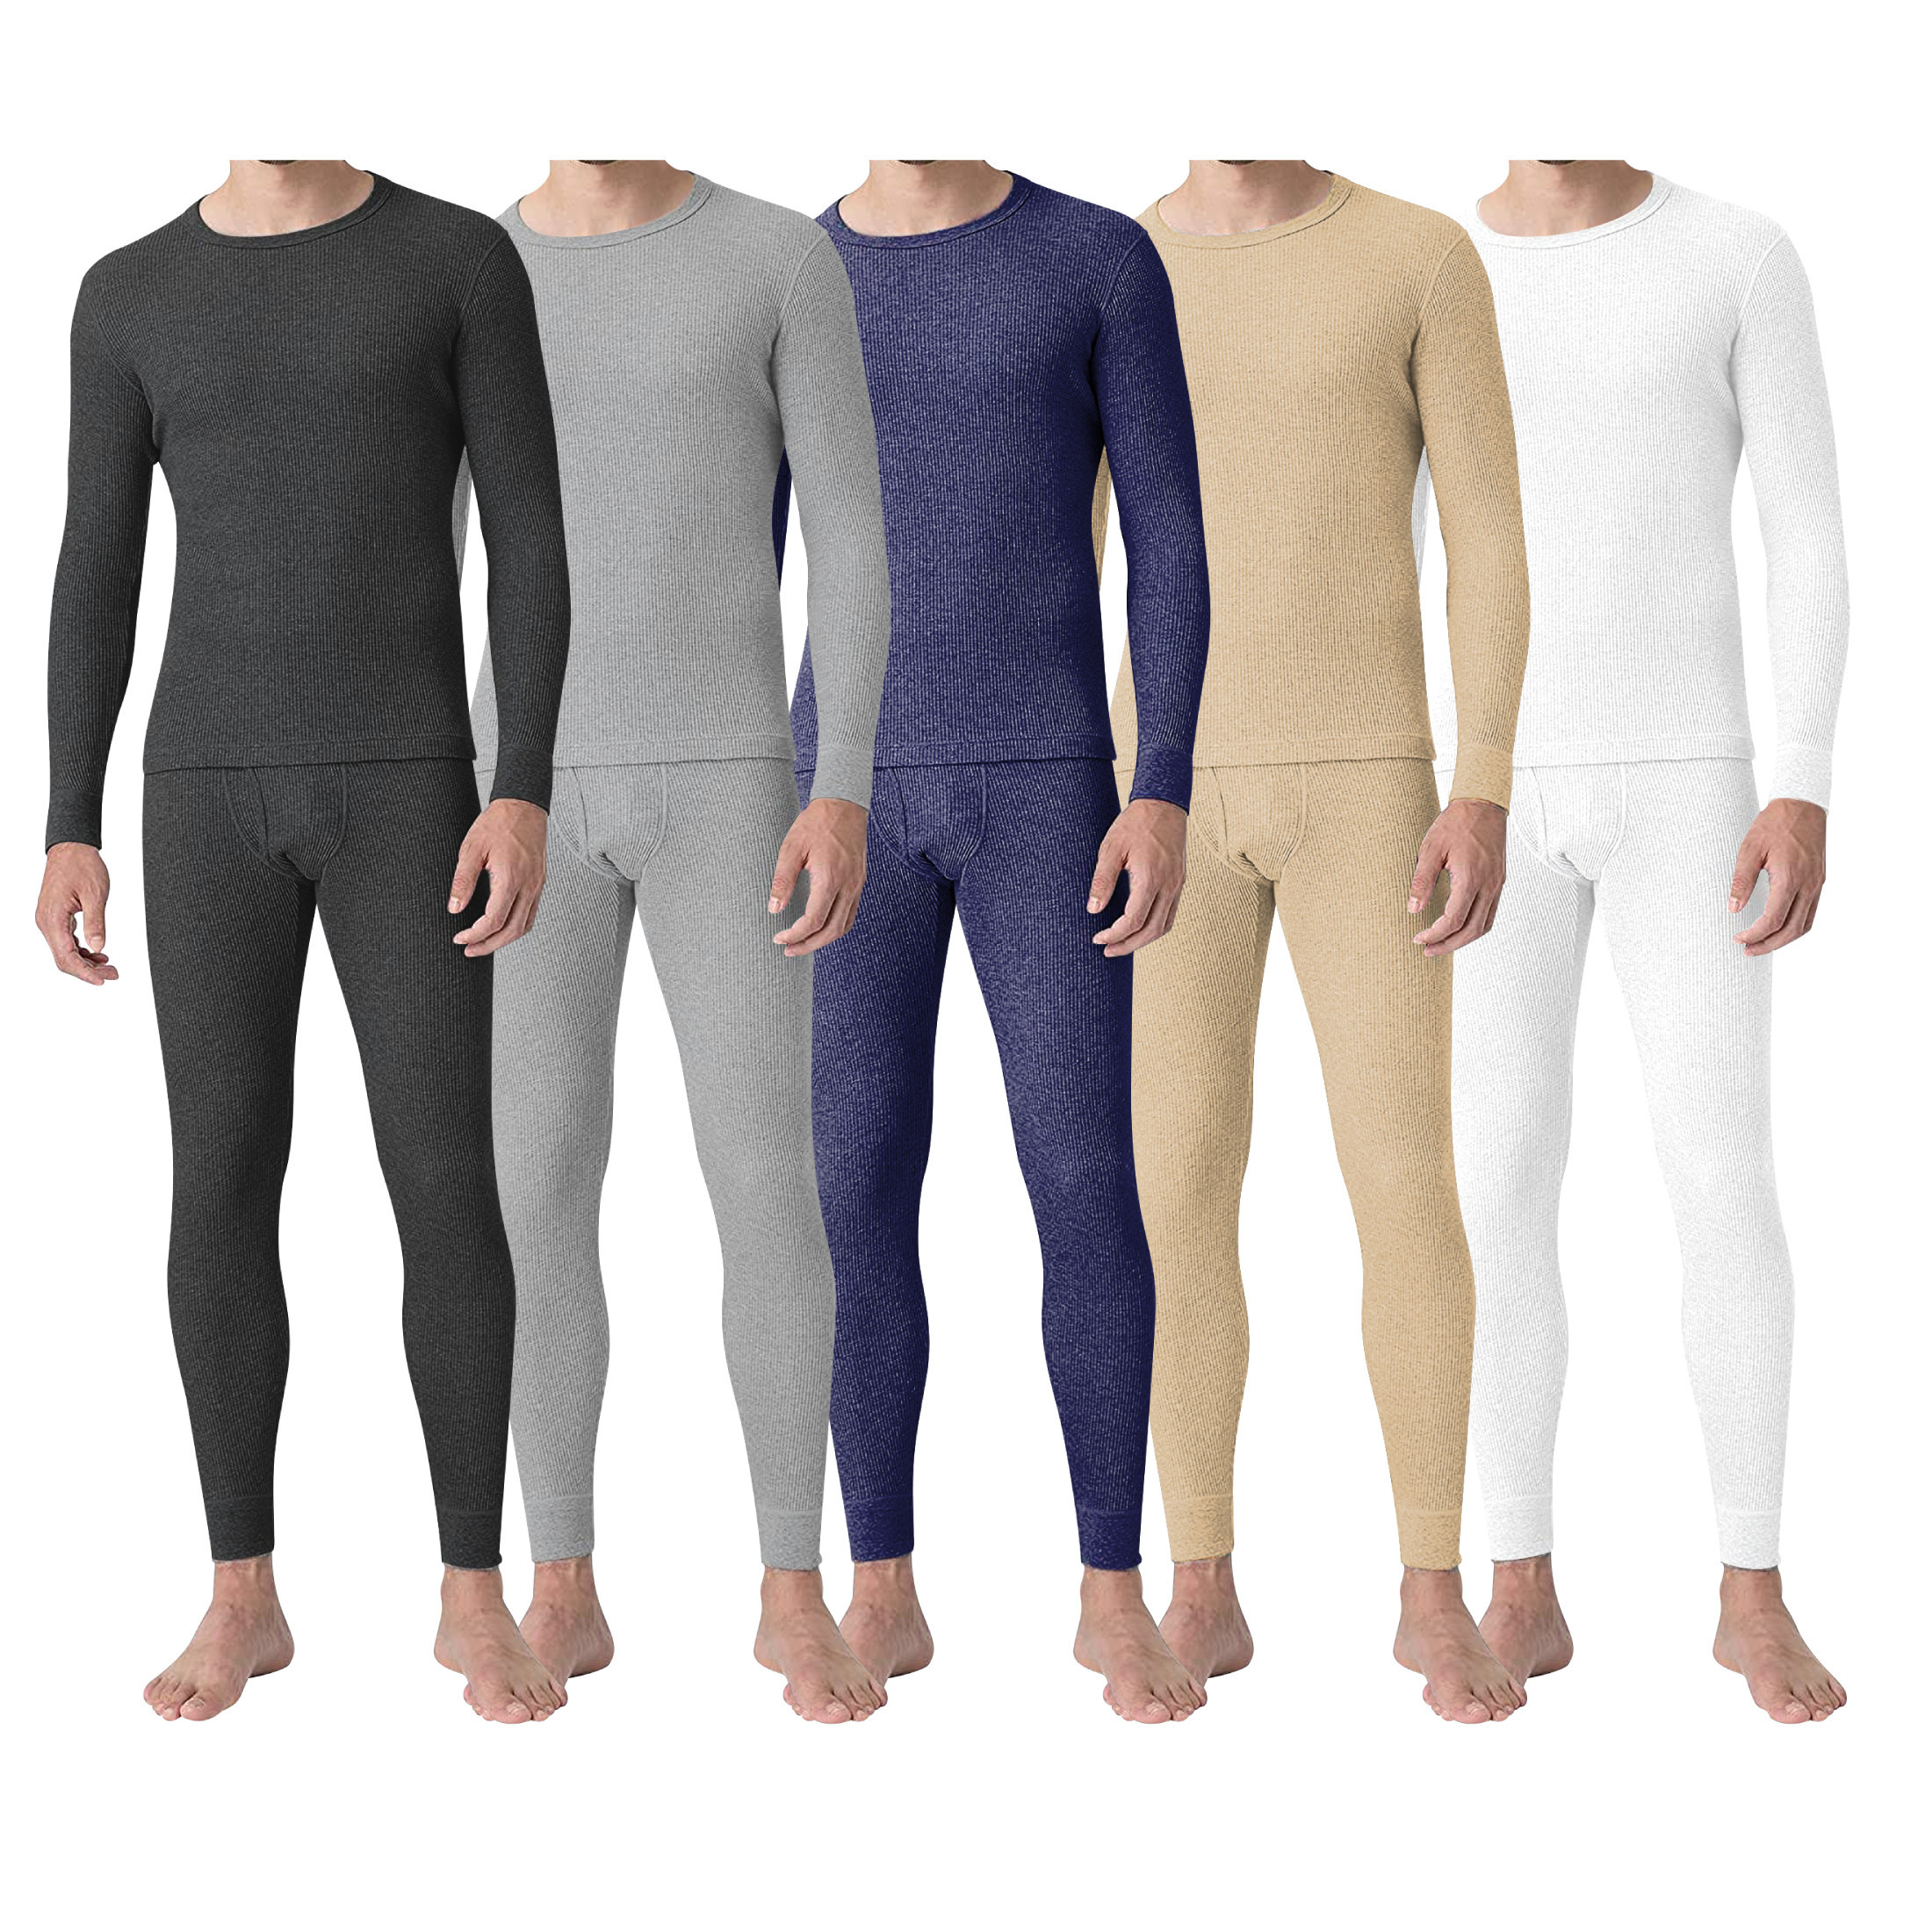 2-Piece: Men's Super Soft Cotton Waffle Knit Winter Thermal Underwear Set - Grey, Large